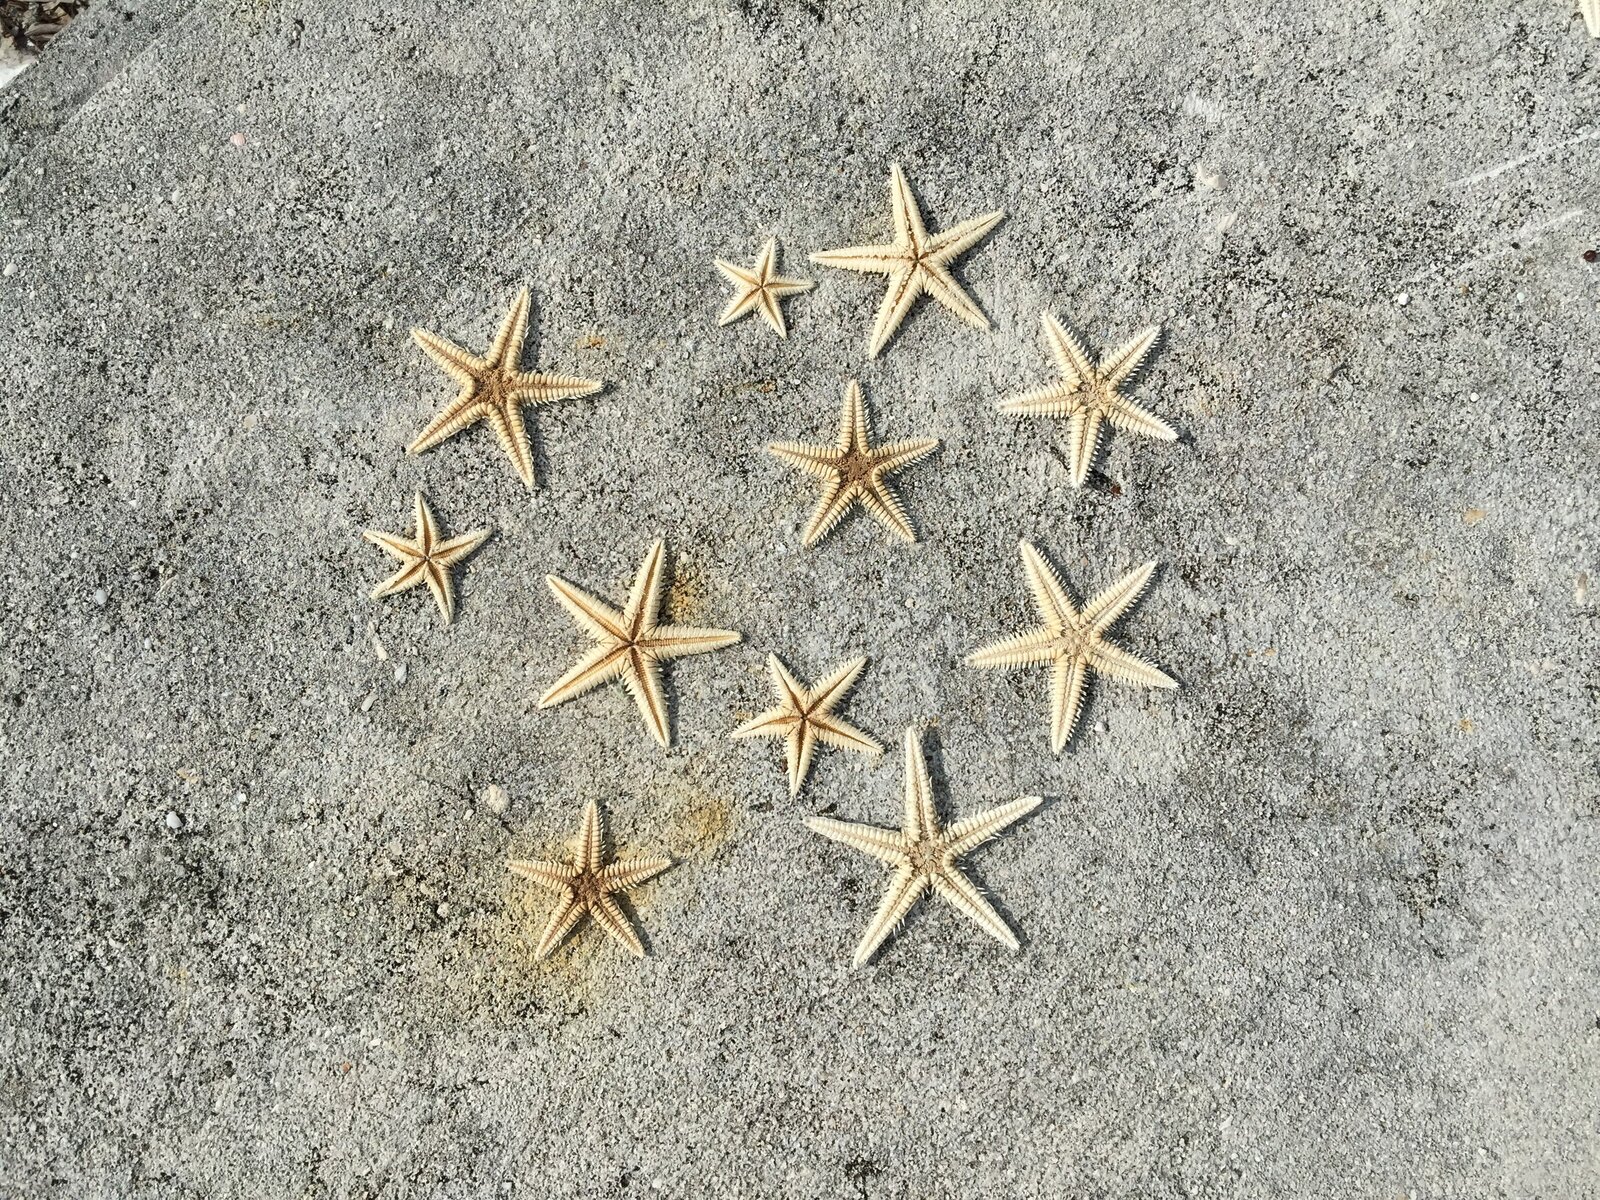 Starfish-Eleuthera-Bahamas-IMG_6839